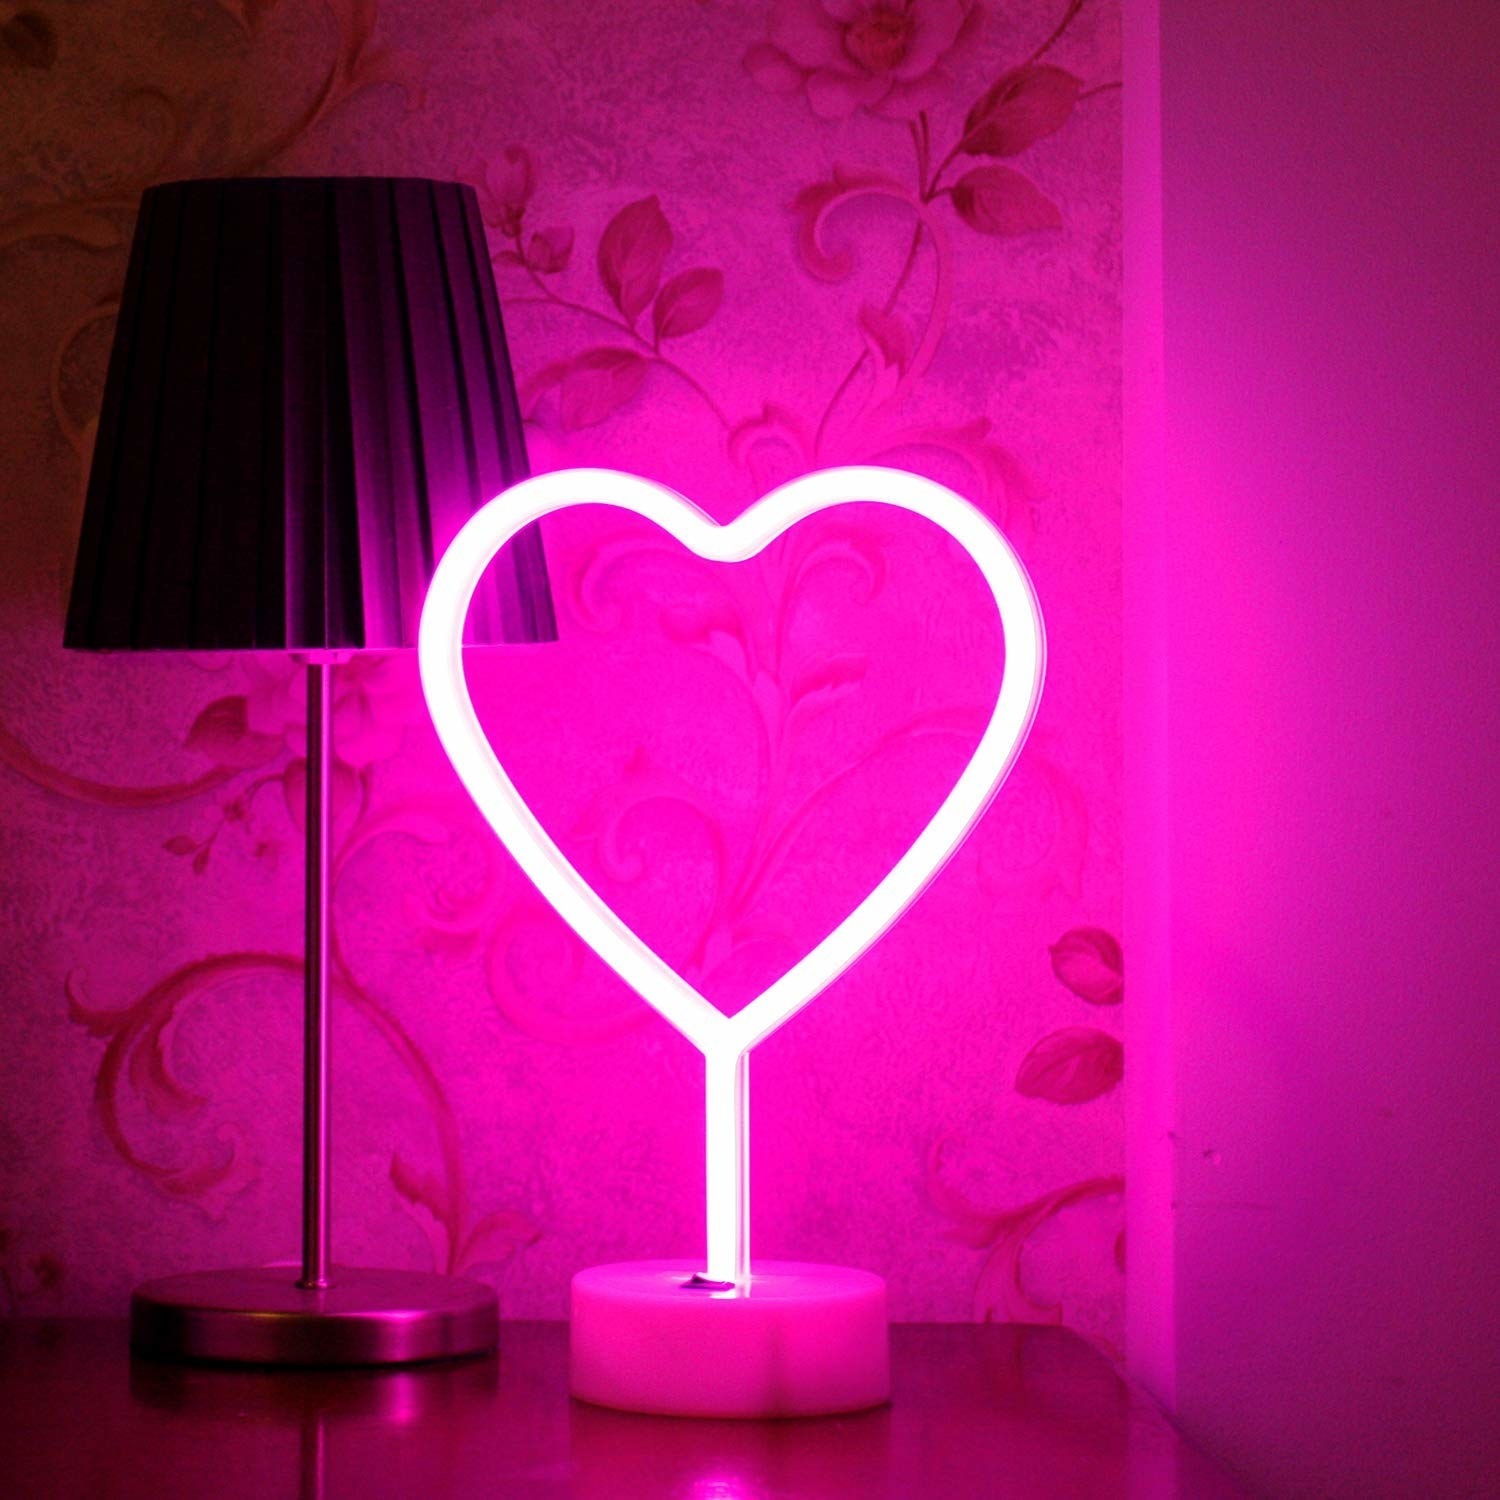 A neon pink heart lamp.